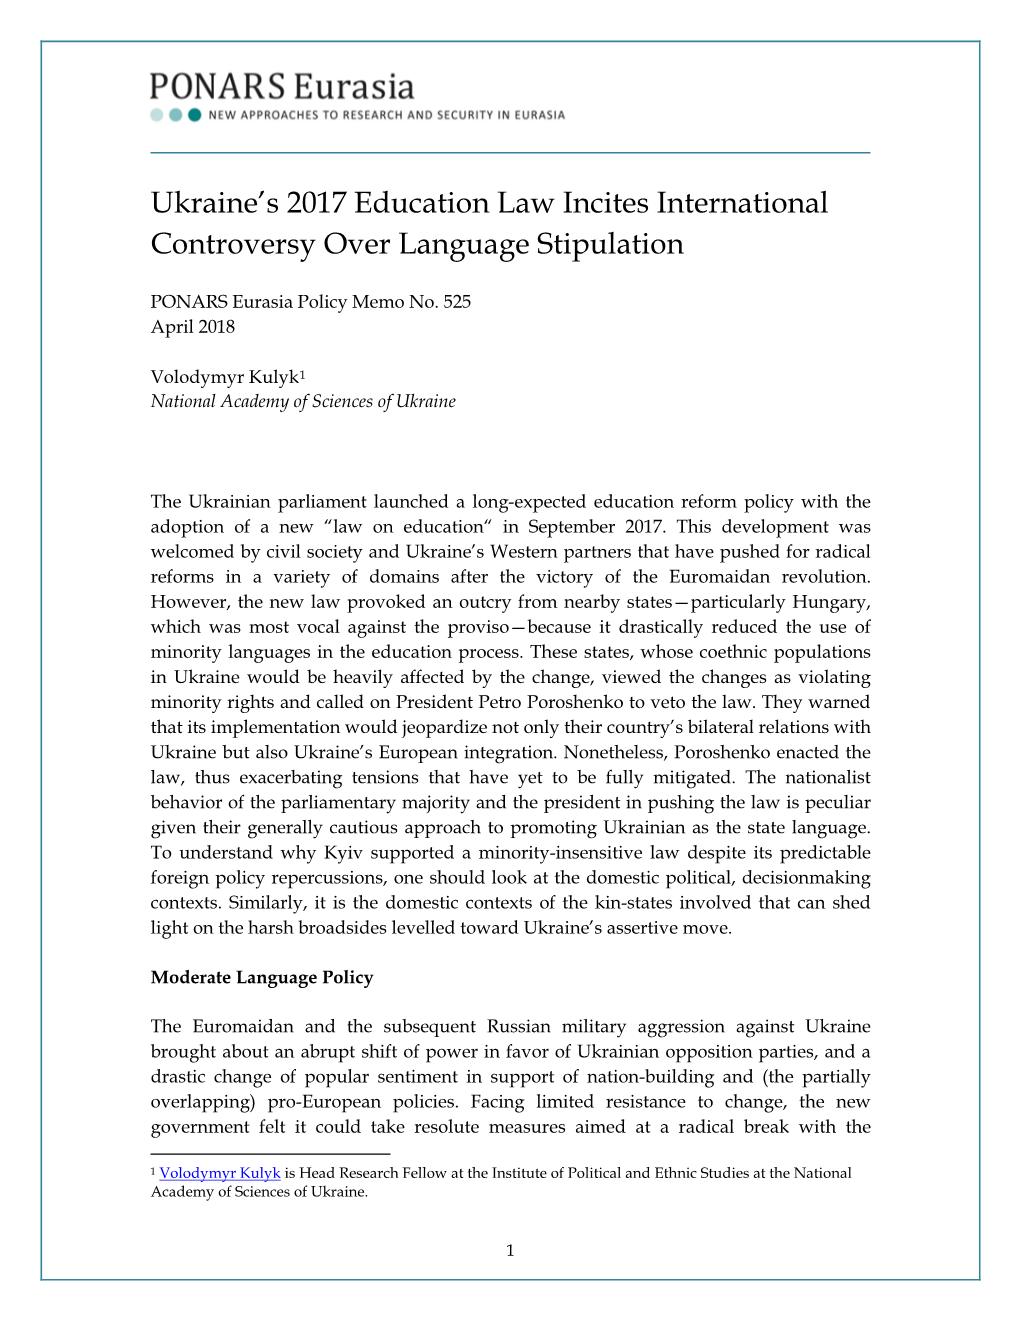 Ukraine's 2017 Education Law Incites International Controversy Over